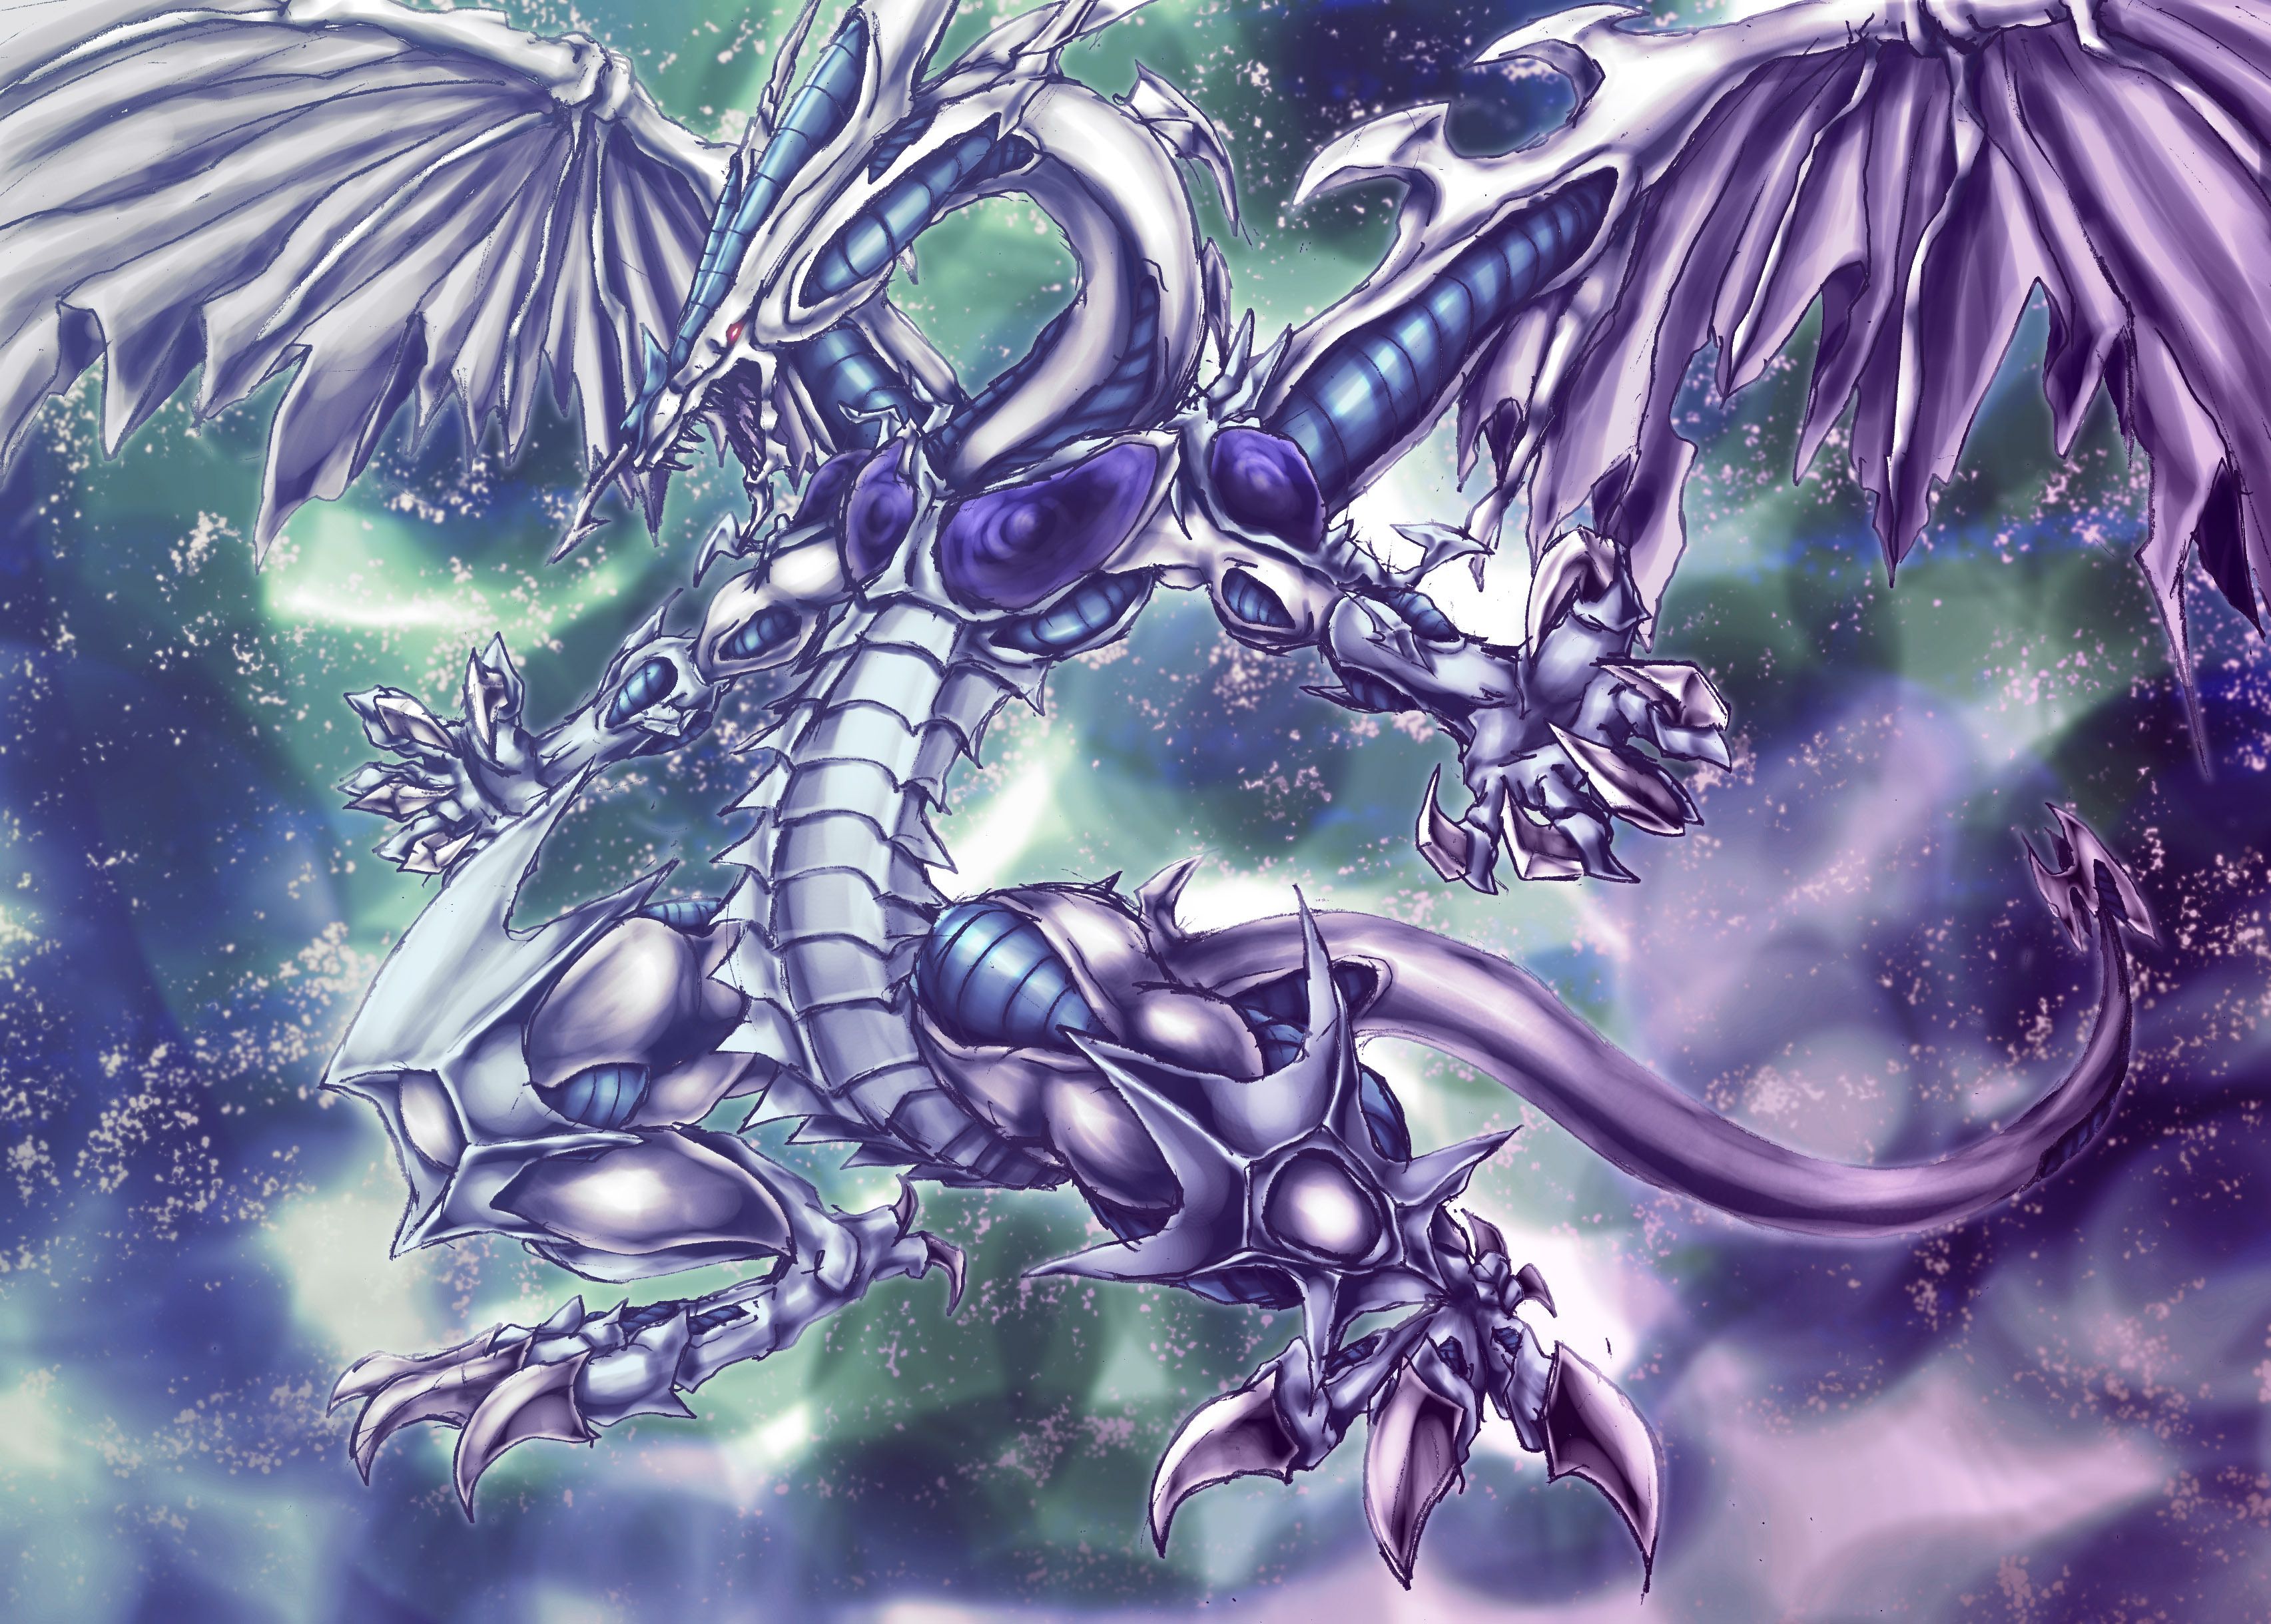 Silver Dragon Desktop Background. Awesome